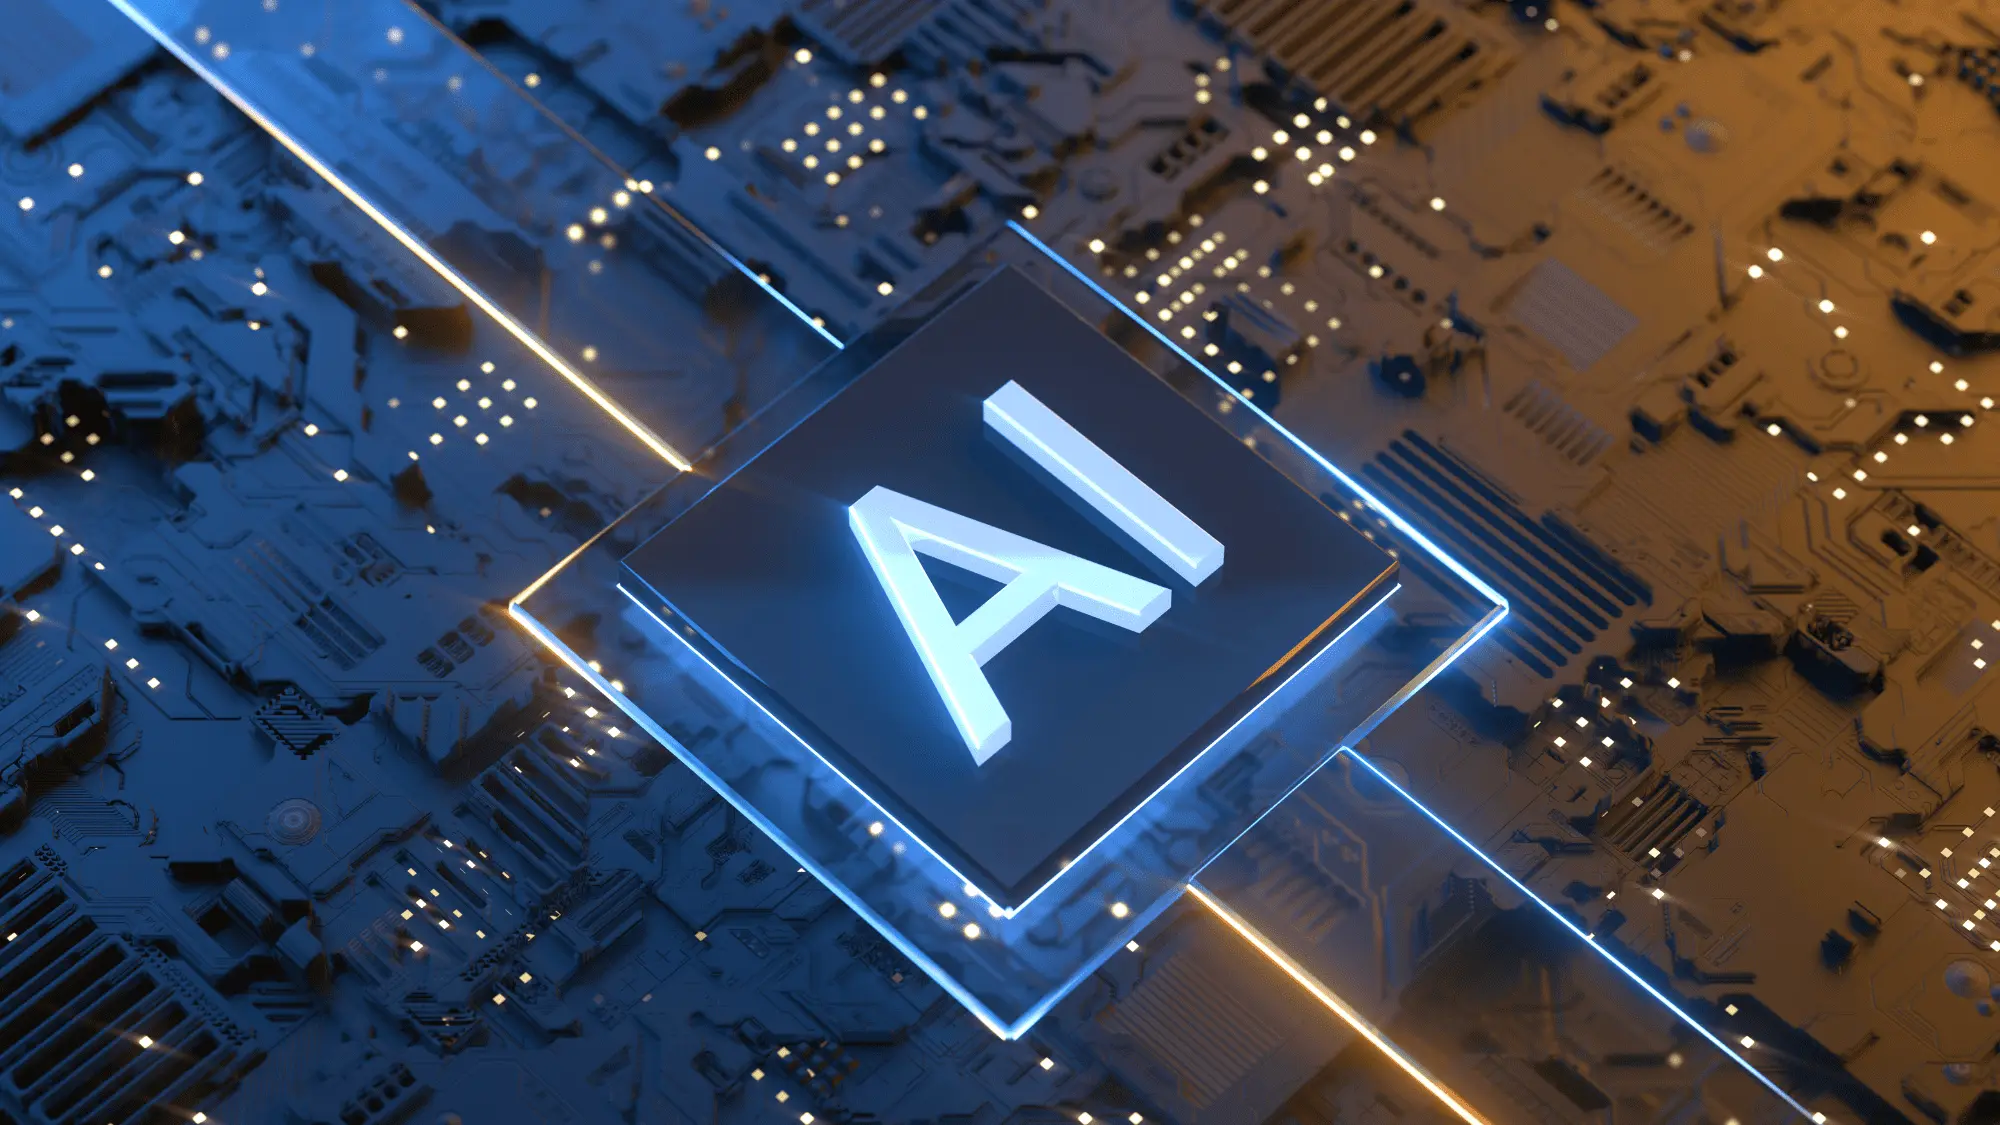 An AI chip